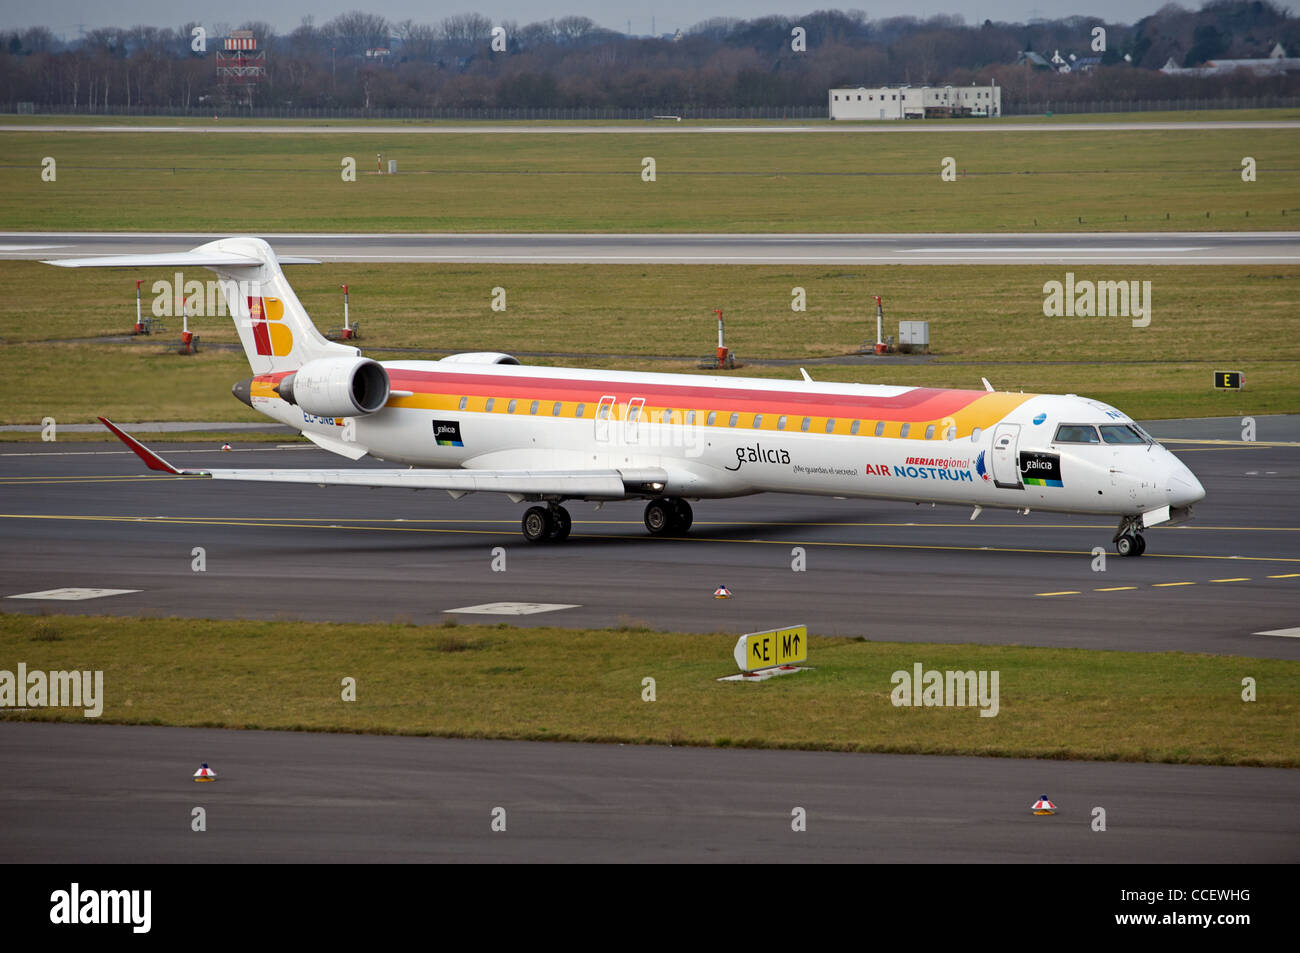 Air Nostrum (Iberia Airlines regionale) Canadair CRJ900 aereo di linea di passeggeri, Dusseldorf, Germania. Foto Stock